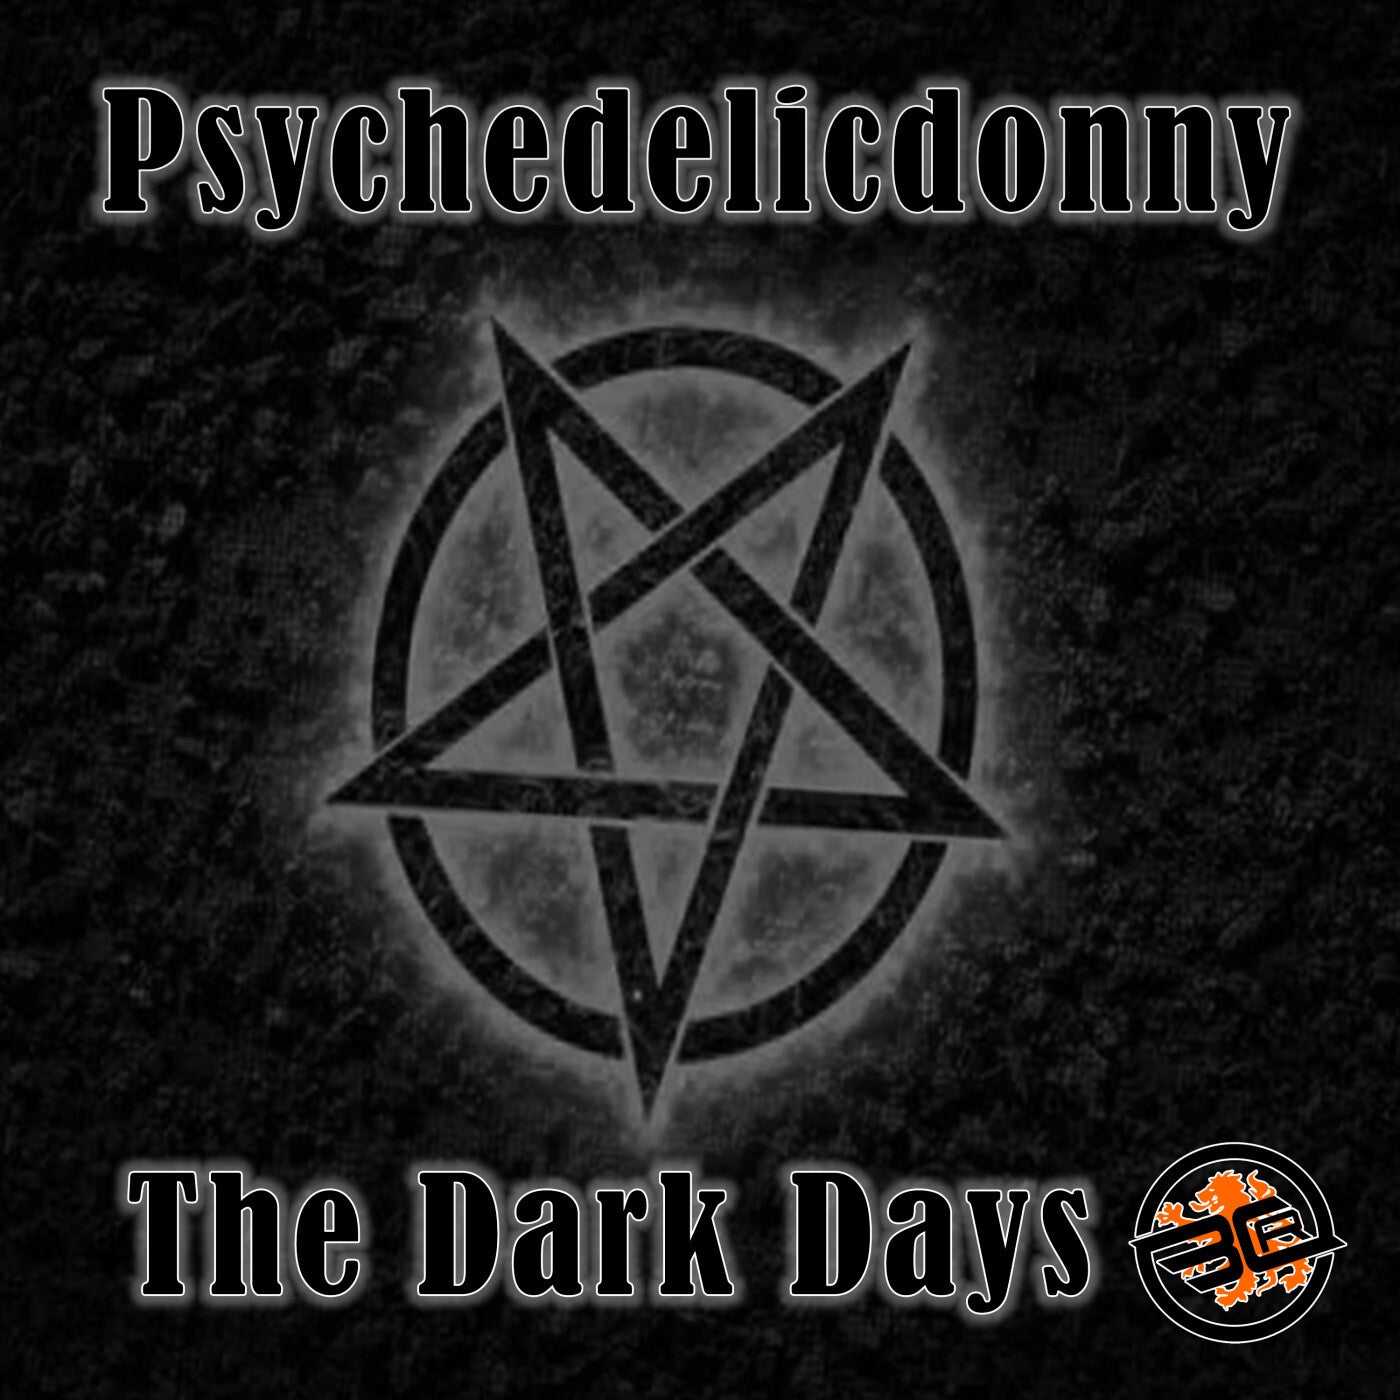 The Dark Days EP